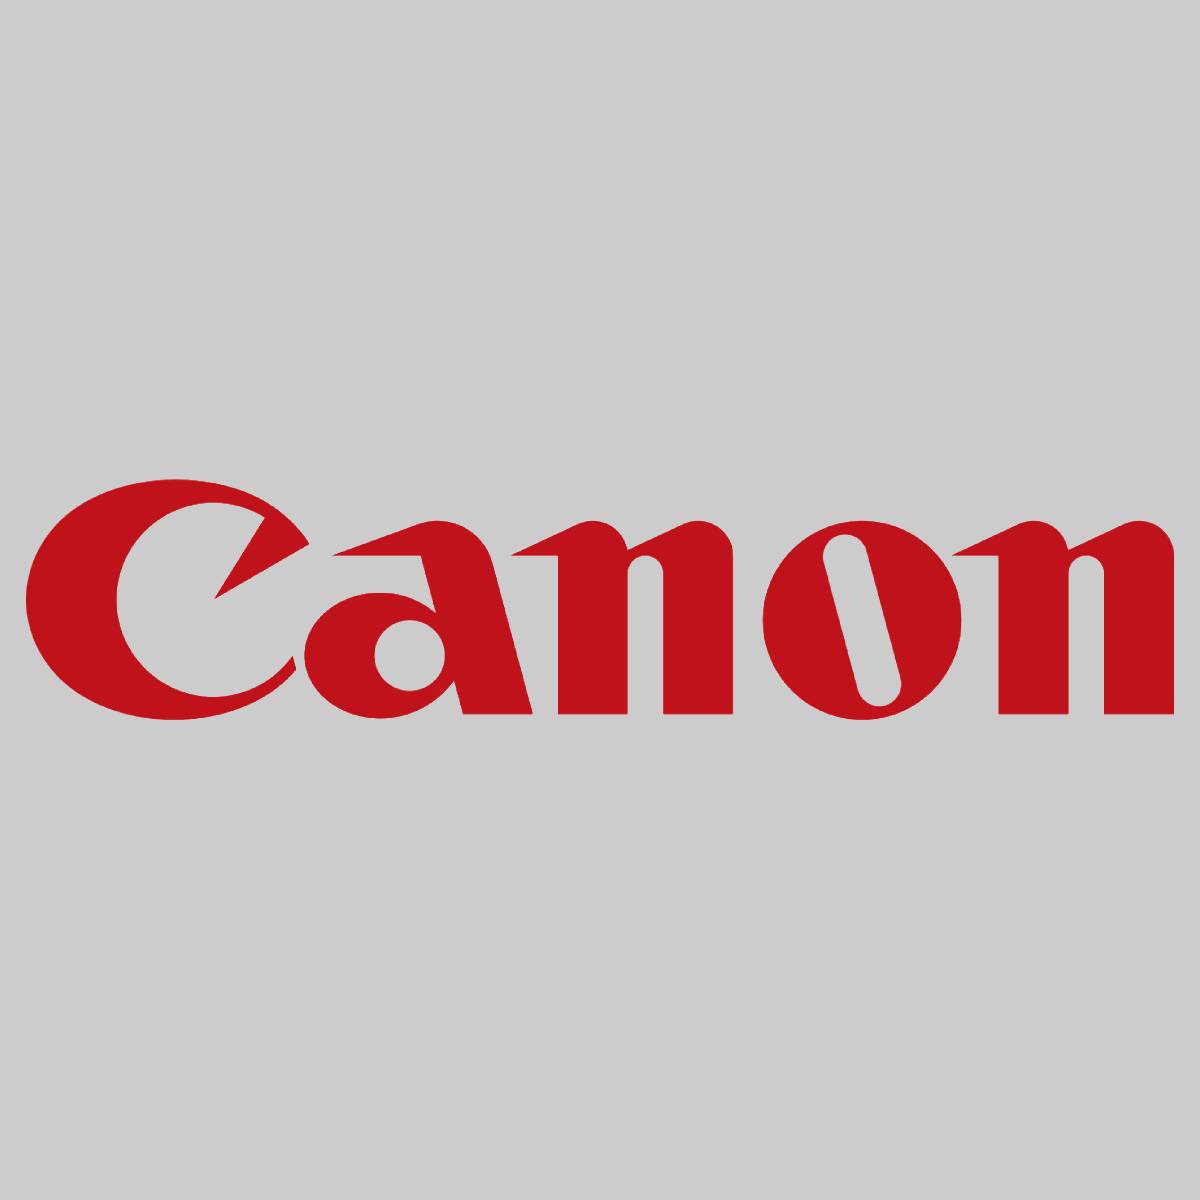 "Original Canon C-EXV 29 Toner Black 2790B002 imageRUNNER ADVANCE C5030/C5030i